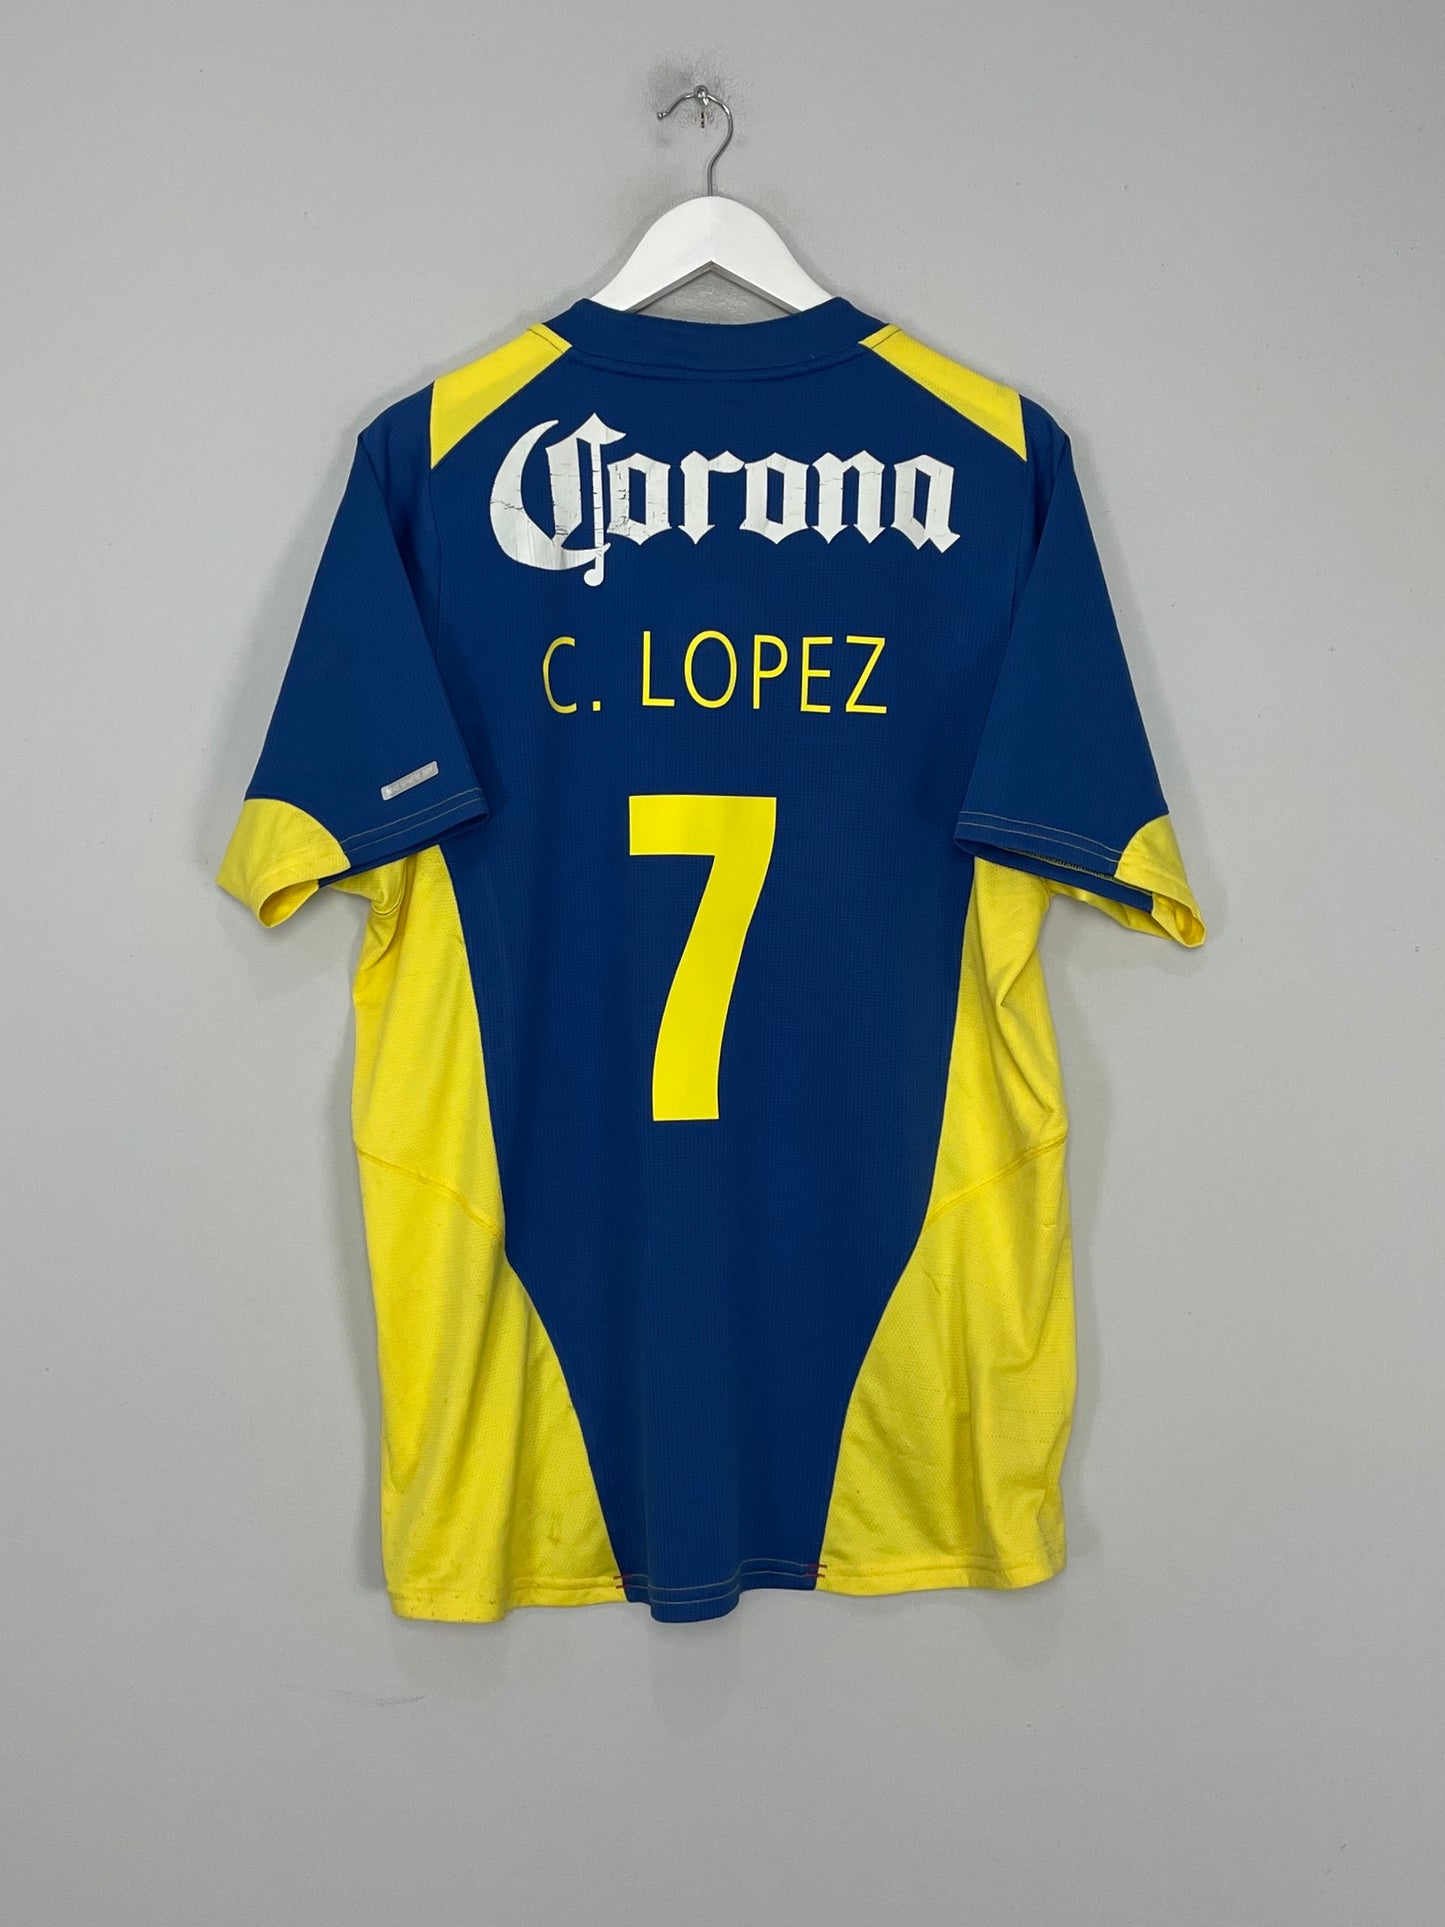 2004/05 CLUB AMERICA C.LOPEZ #7 AWAY SHIRT (XL) NIKE